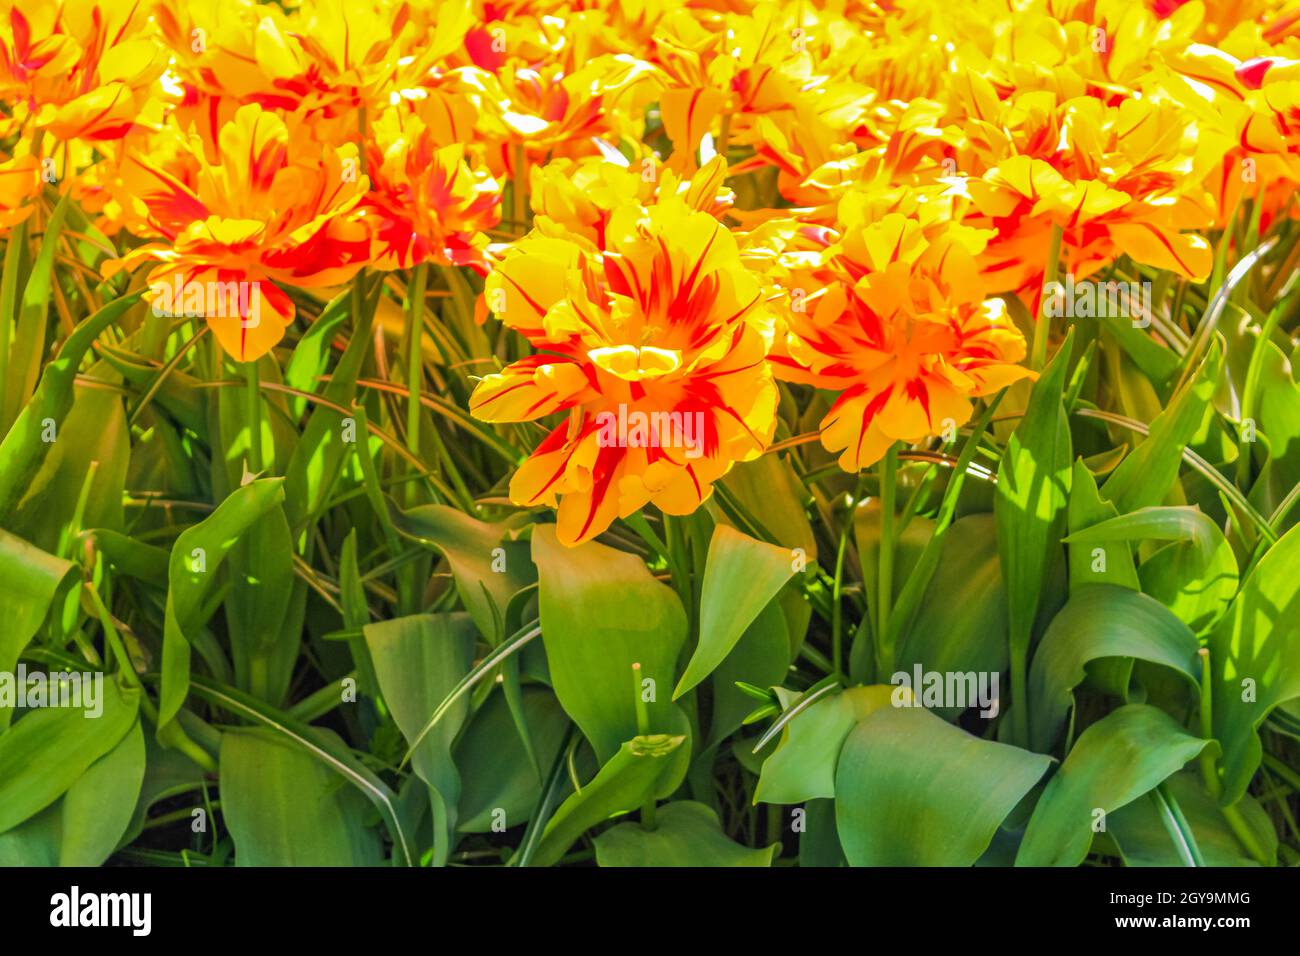 Molti tulipani e narcisi colorati nel parco dei tulipani di Keukenhof a Lisse, Olanda meridionale, Paesi Bassi Foto Stock